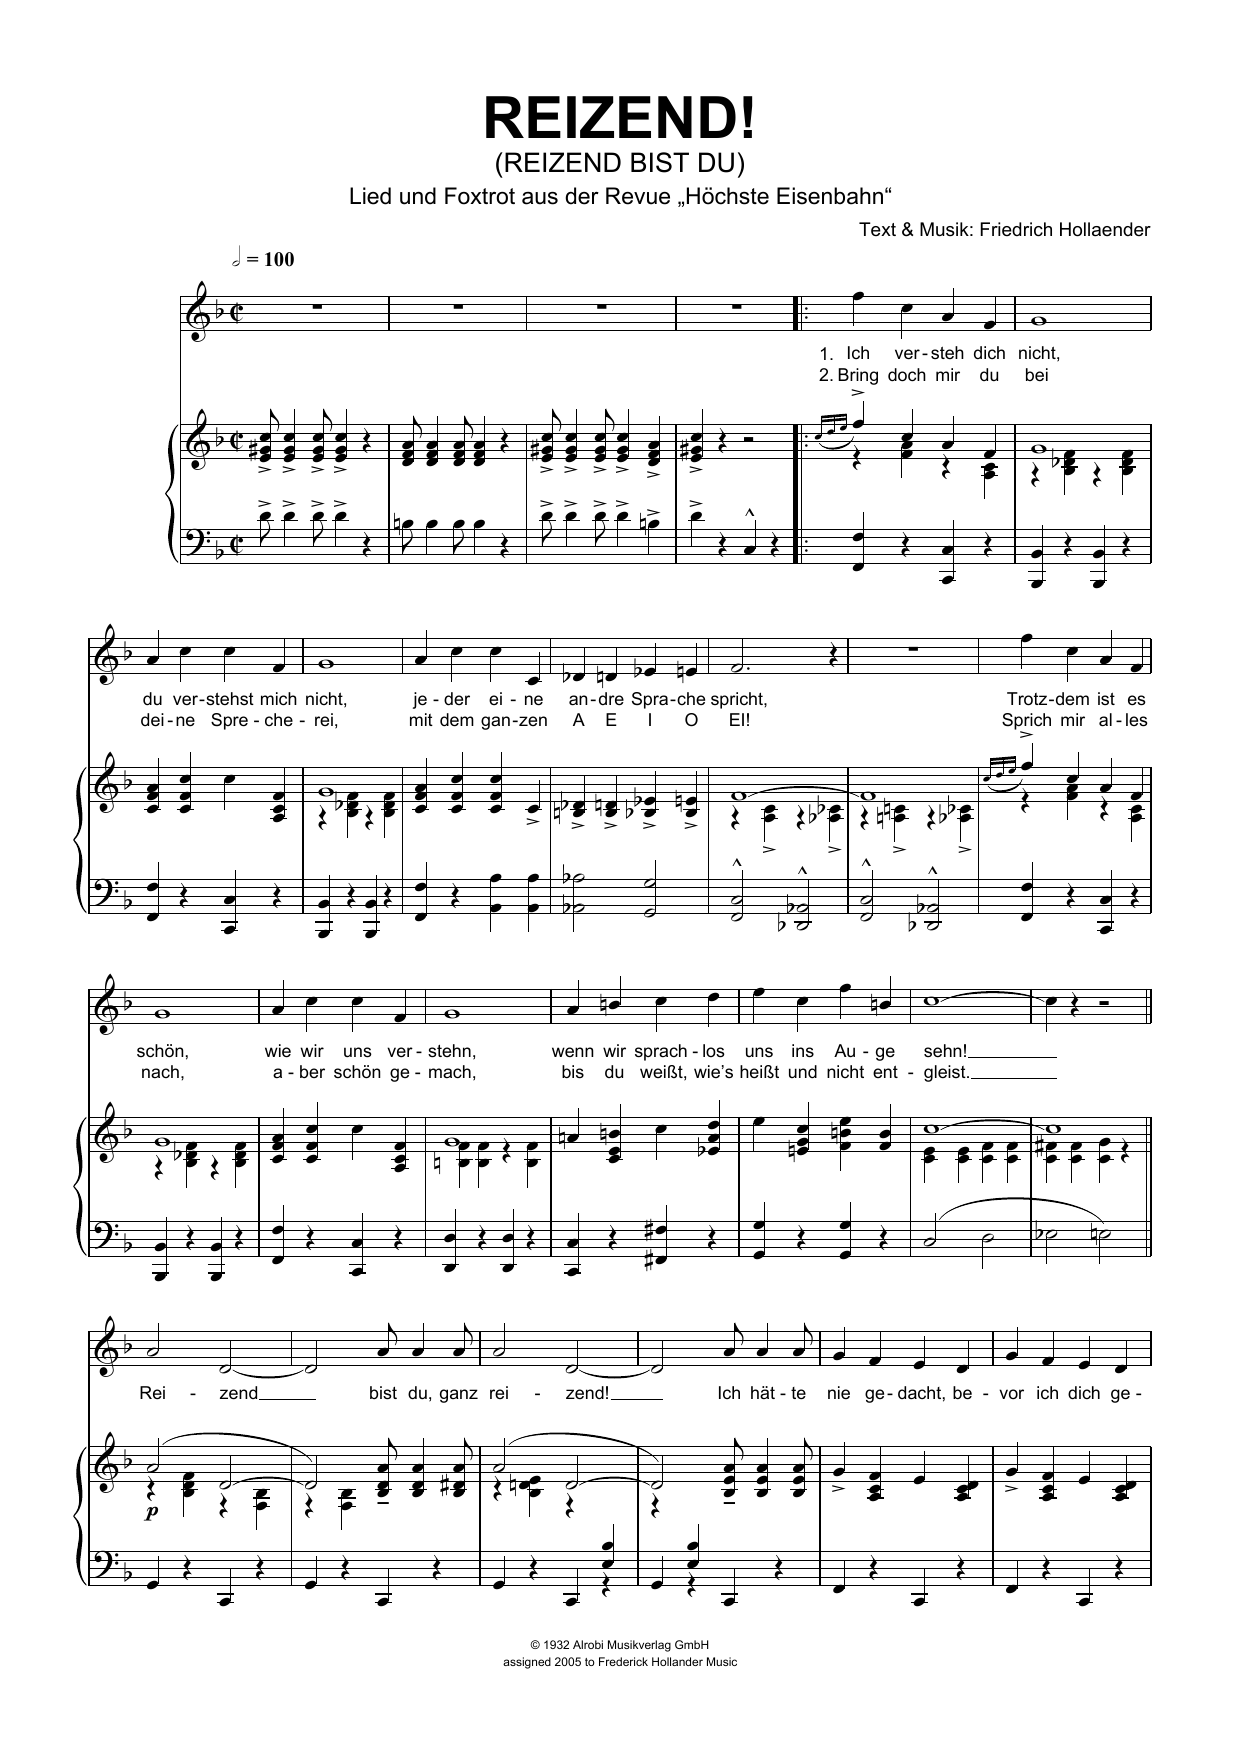 Friedrich Hollaender Reizend! (Reizend Bist Du) Sheet Music Notes & Chords for Piano & Vocal - Download or Print PDF